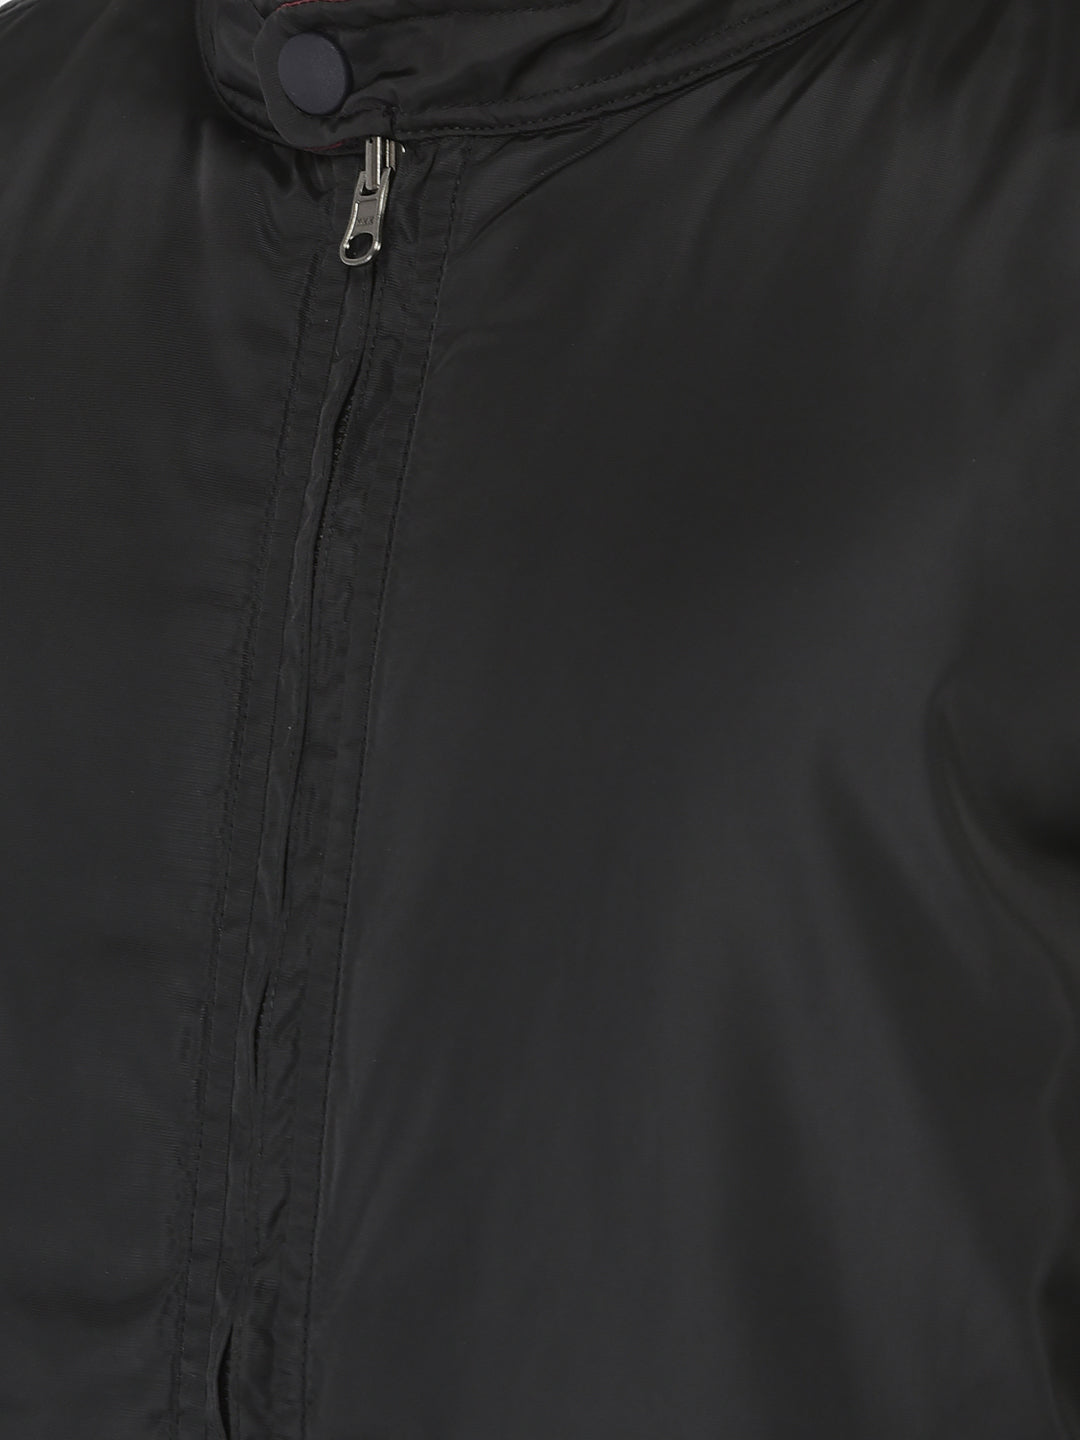  Black Reversible Jacket in Polyester